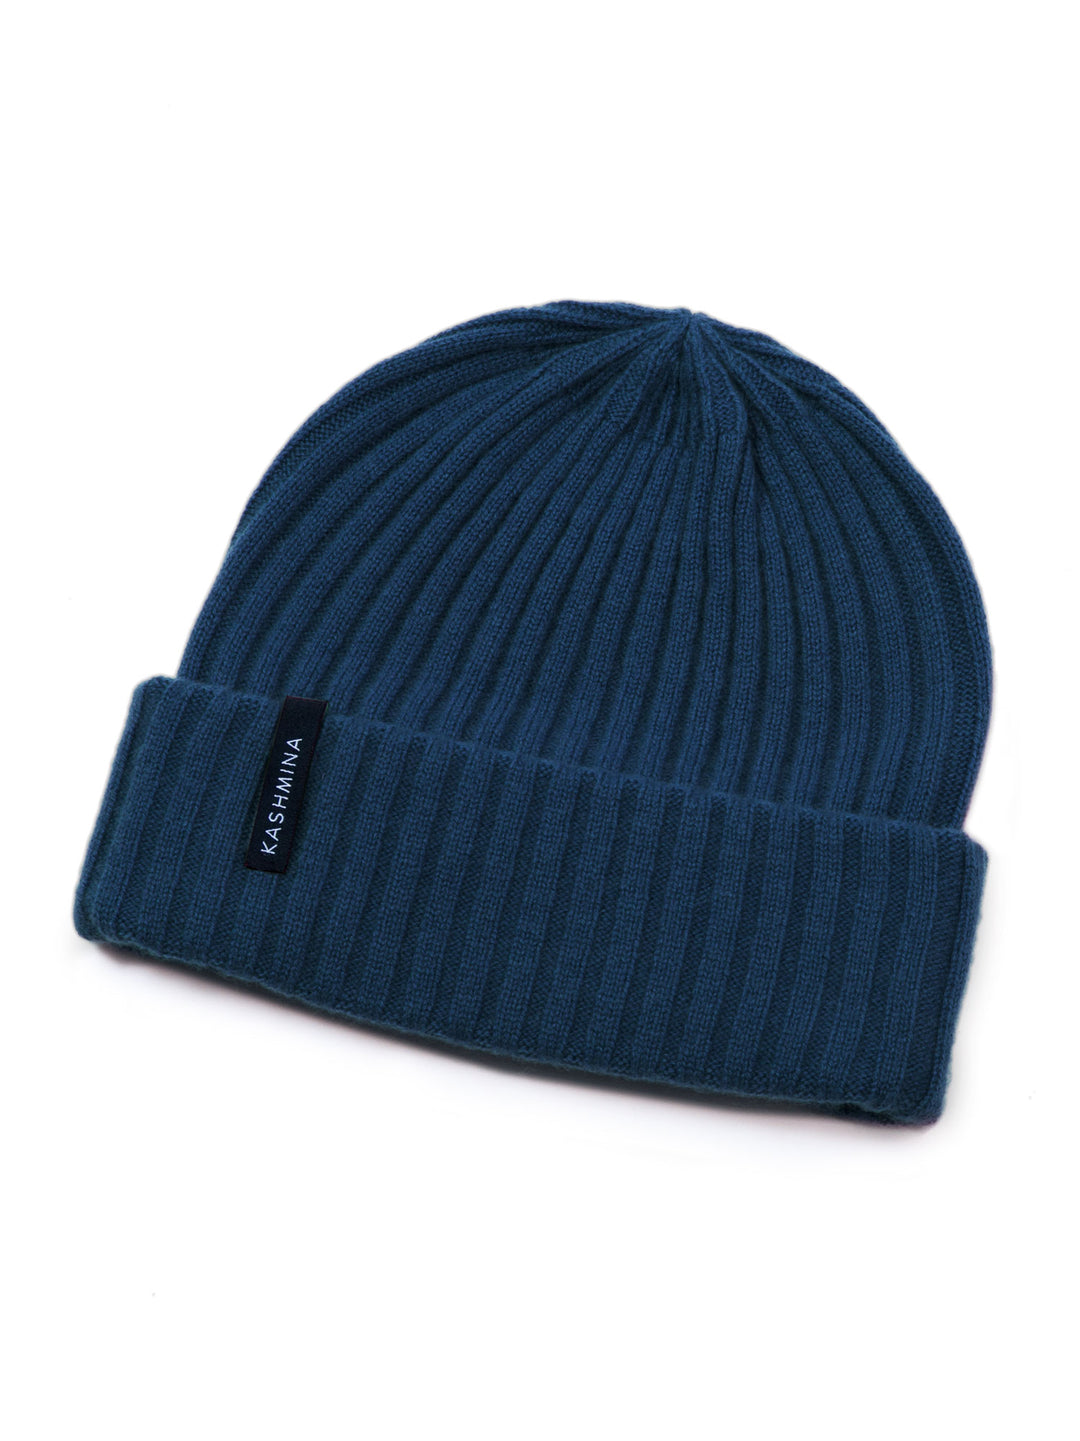 cashmere hat "fat rib" mountain blue, 100% cashmere from Kashmina, Norwegian design beanie